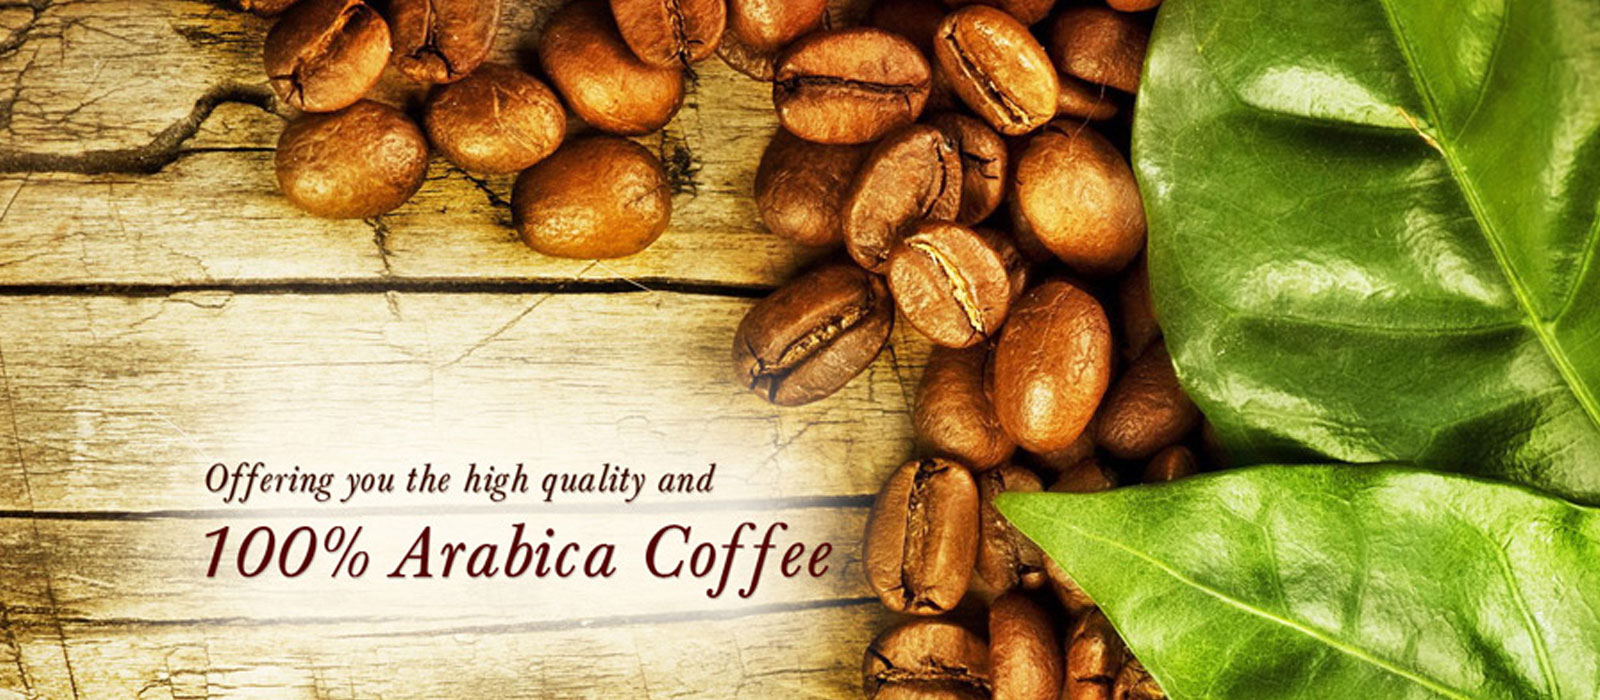 African Coffee Brands, Arabica Coffee